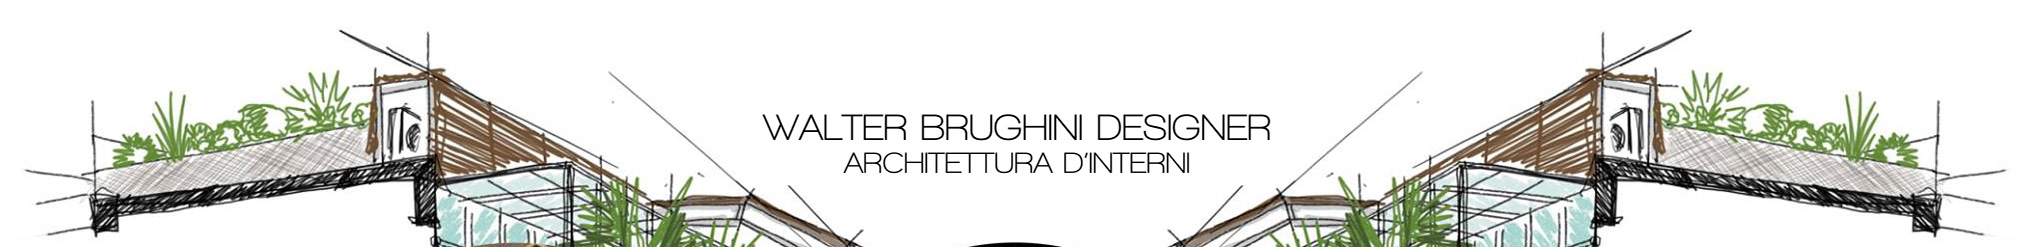 walter brughini's profile banner